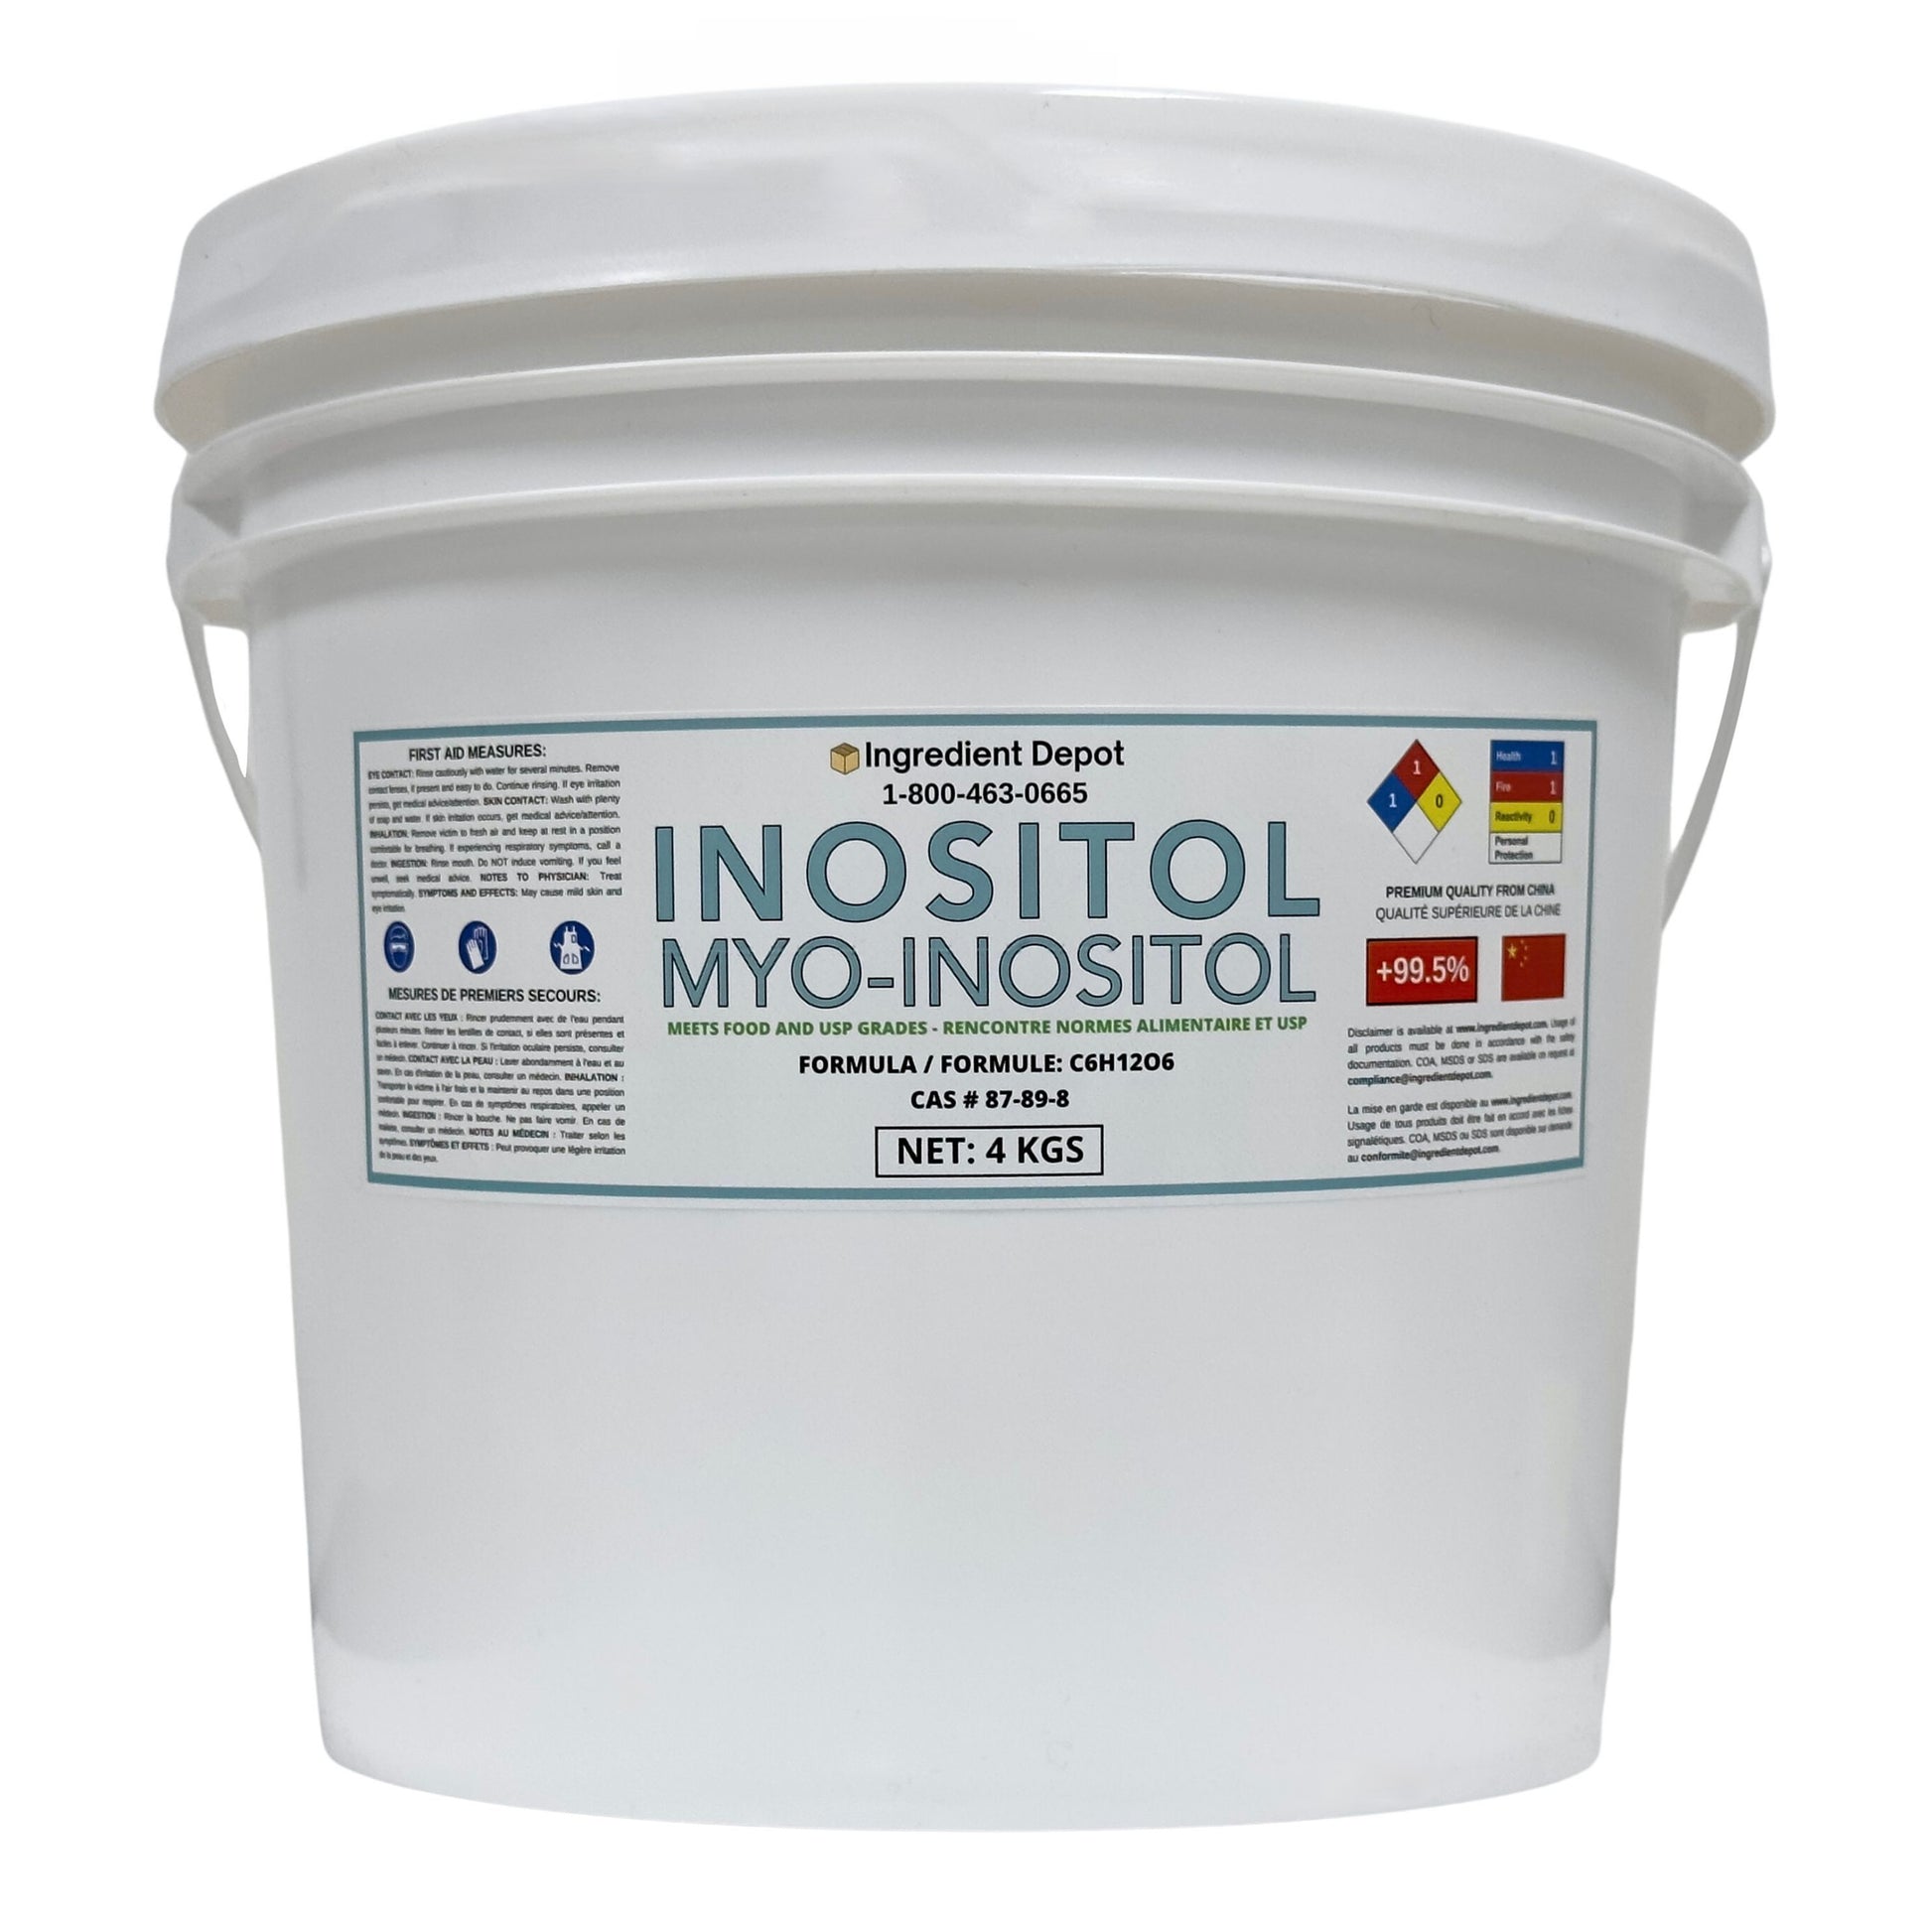 Inositol (myo-inositol), Food and USP Grade 4 kgs - IngredientDepot.com